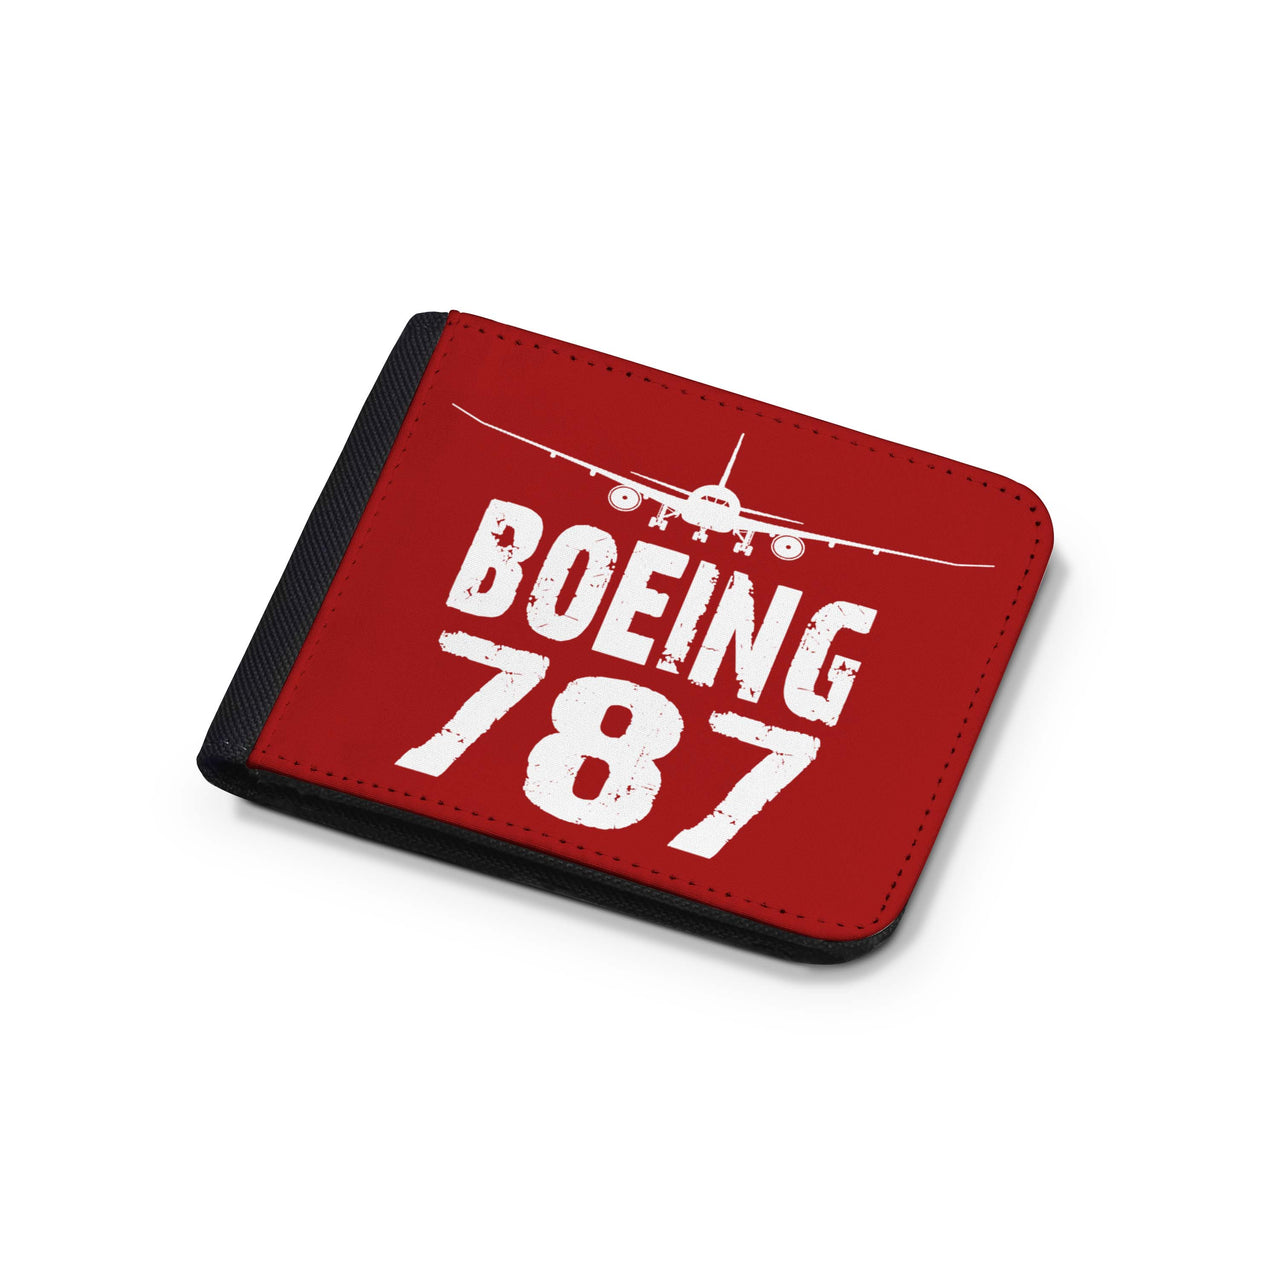 Boeing 787 & Plane Designed Wallets